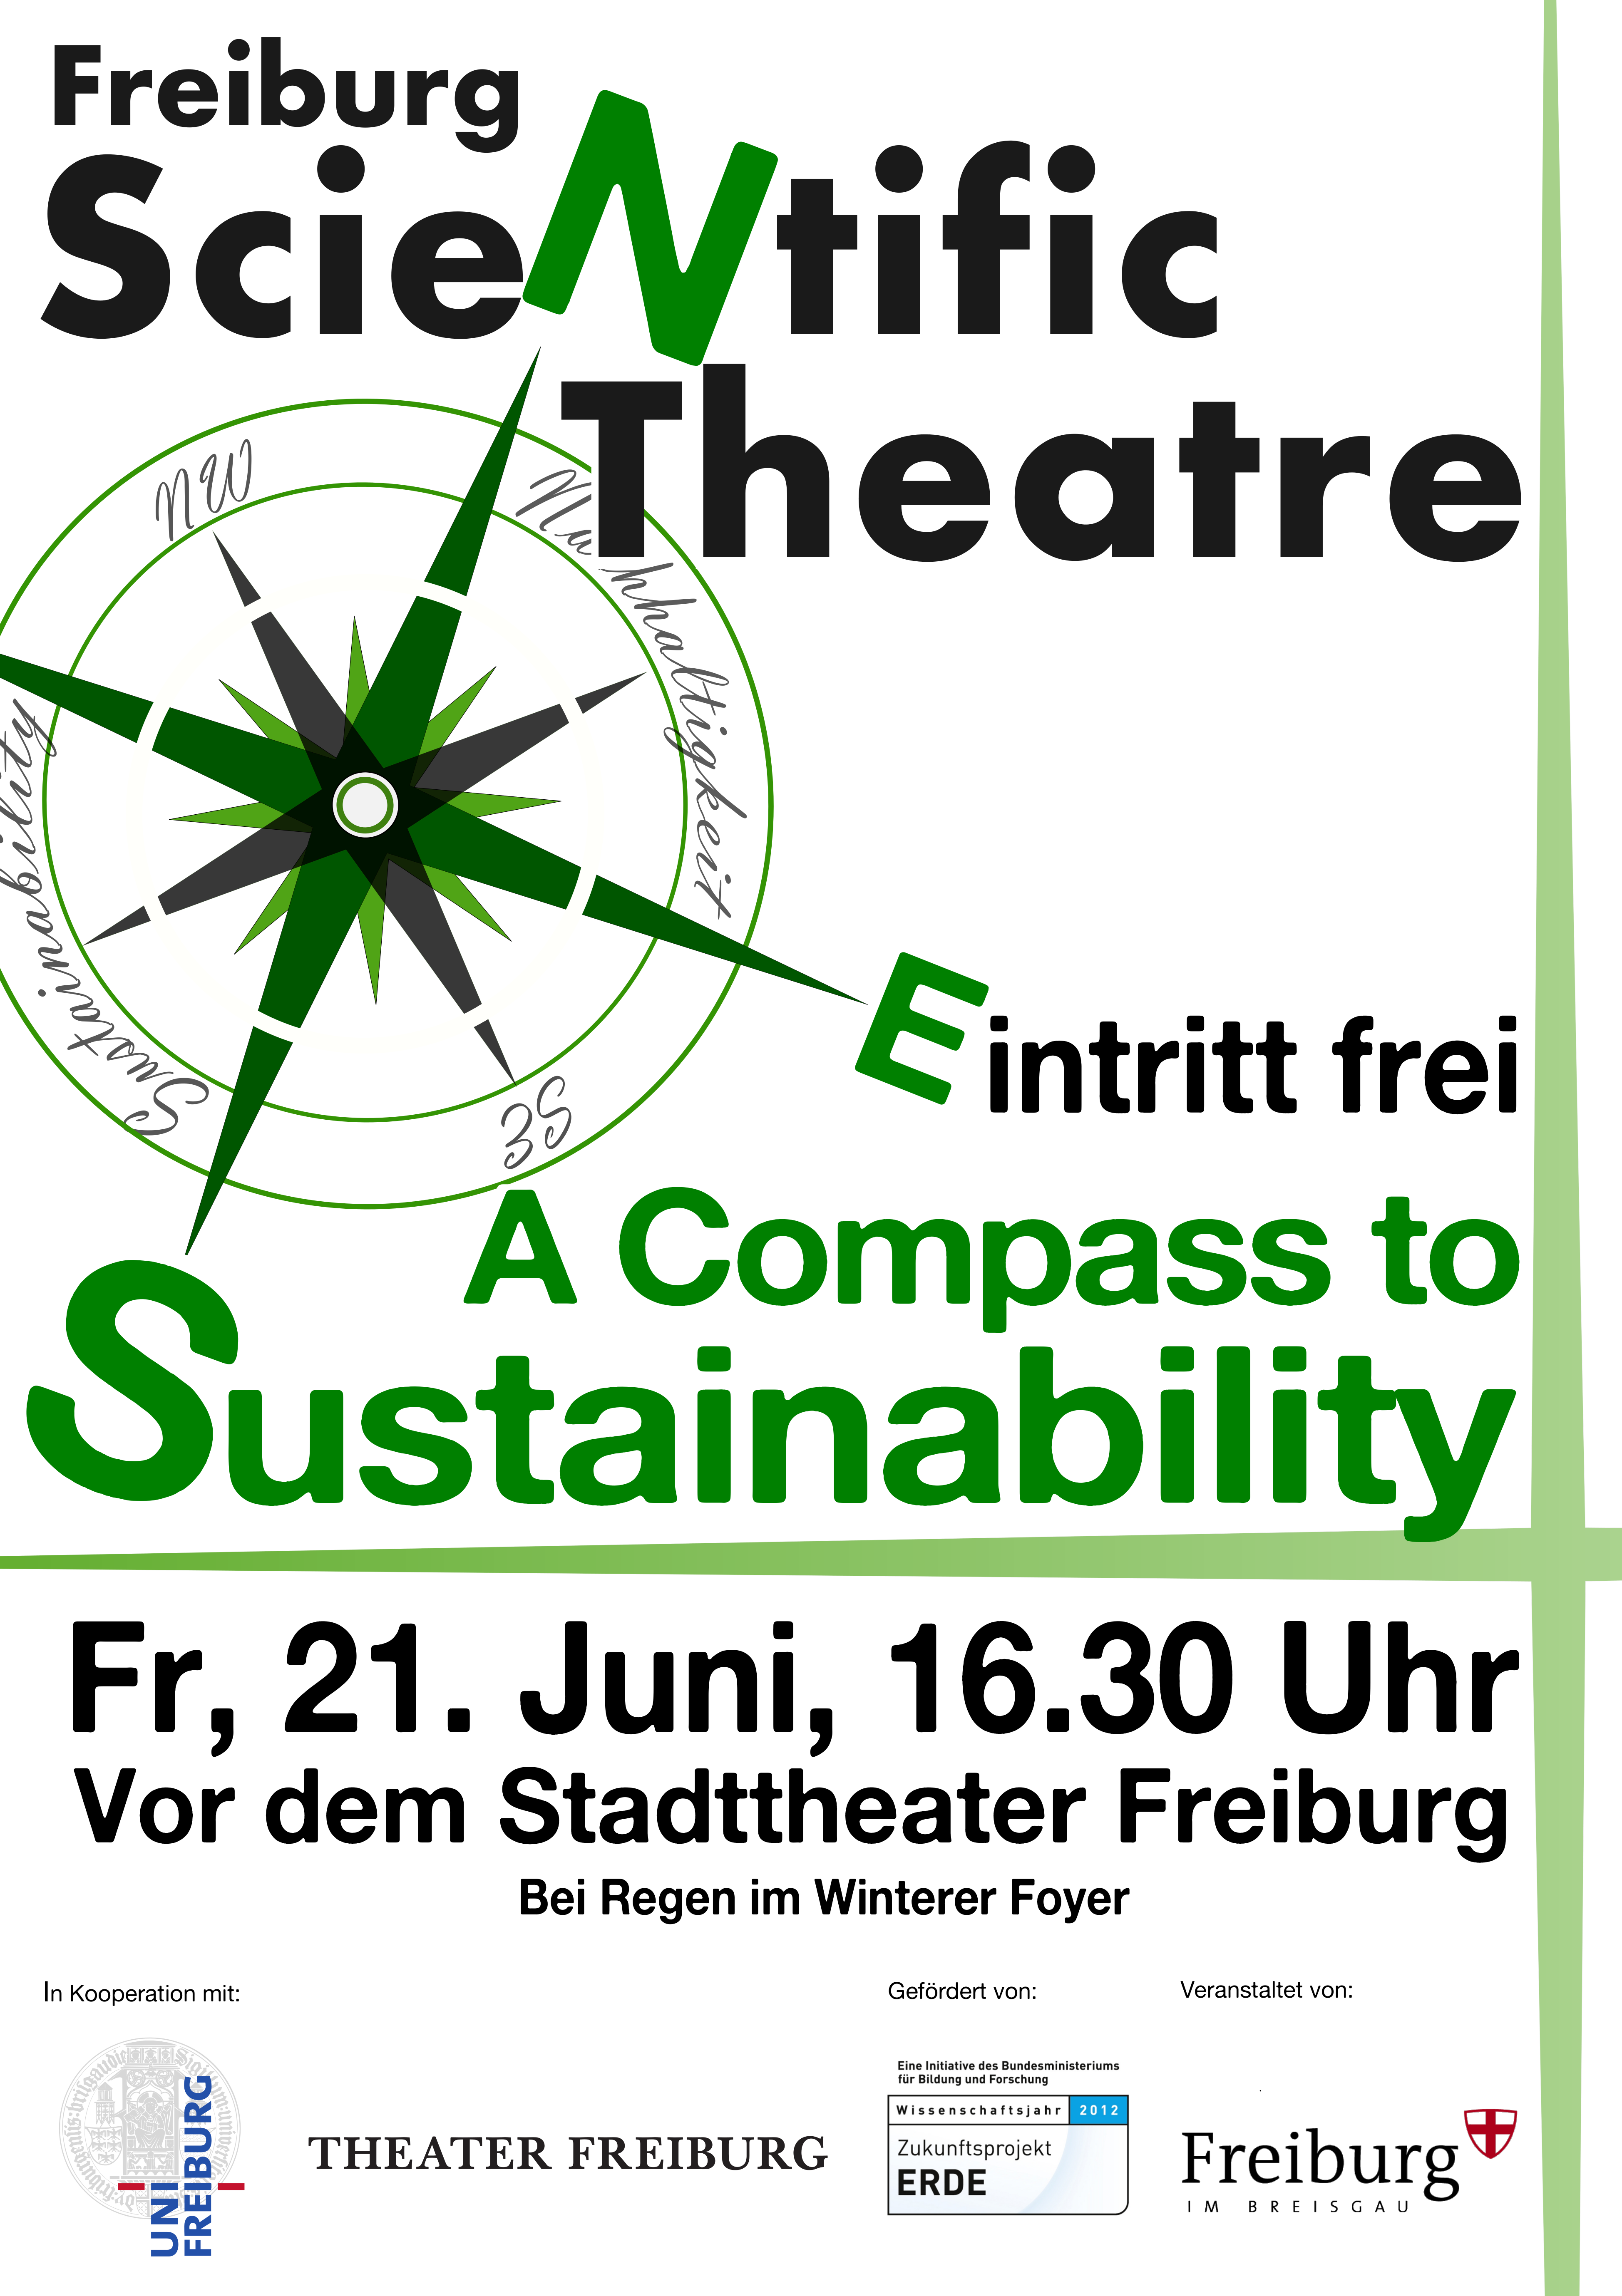 ScientificTheatre_Compass2Sustainability_June_21_OpenAir_in_Freiburg.png